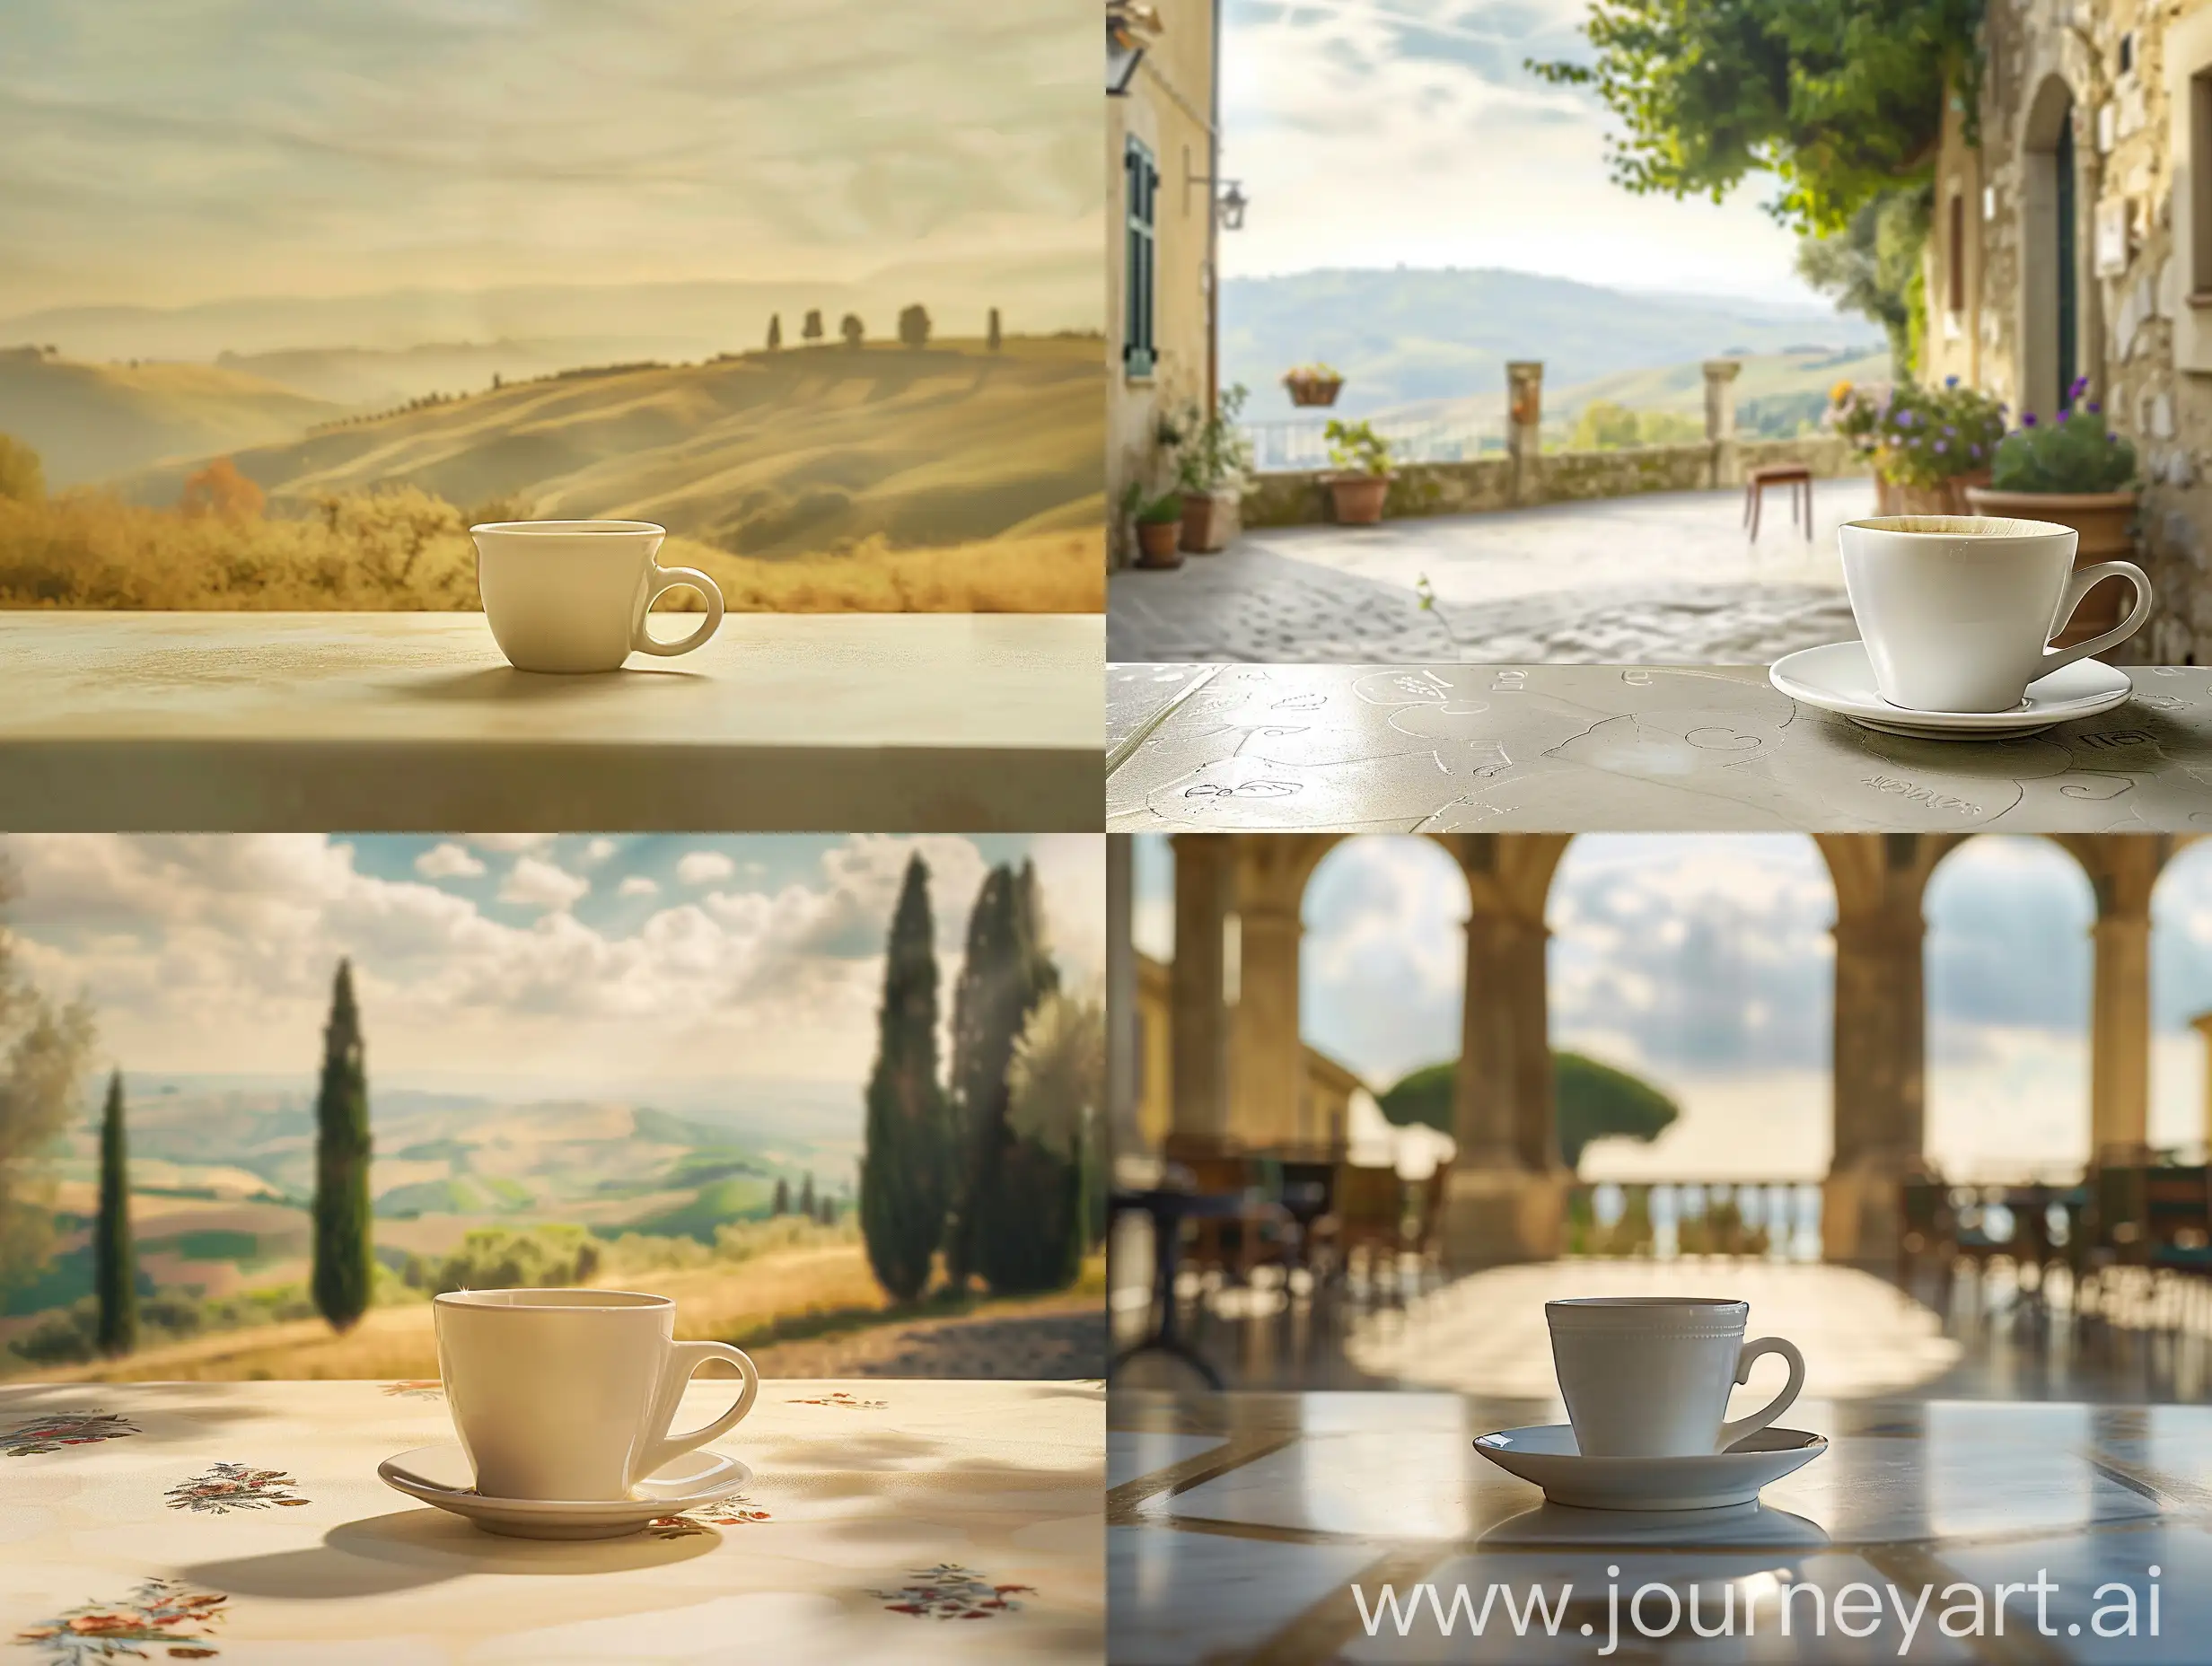 Coffee-Cup-in-Caf-Italian-Landscape-Backdrop-Studio-Shot